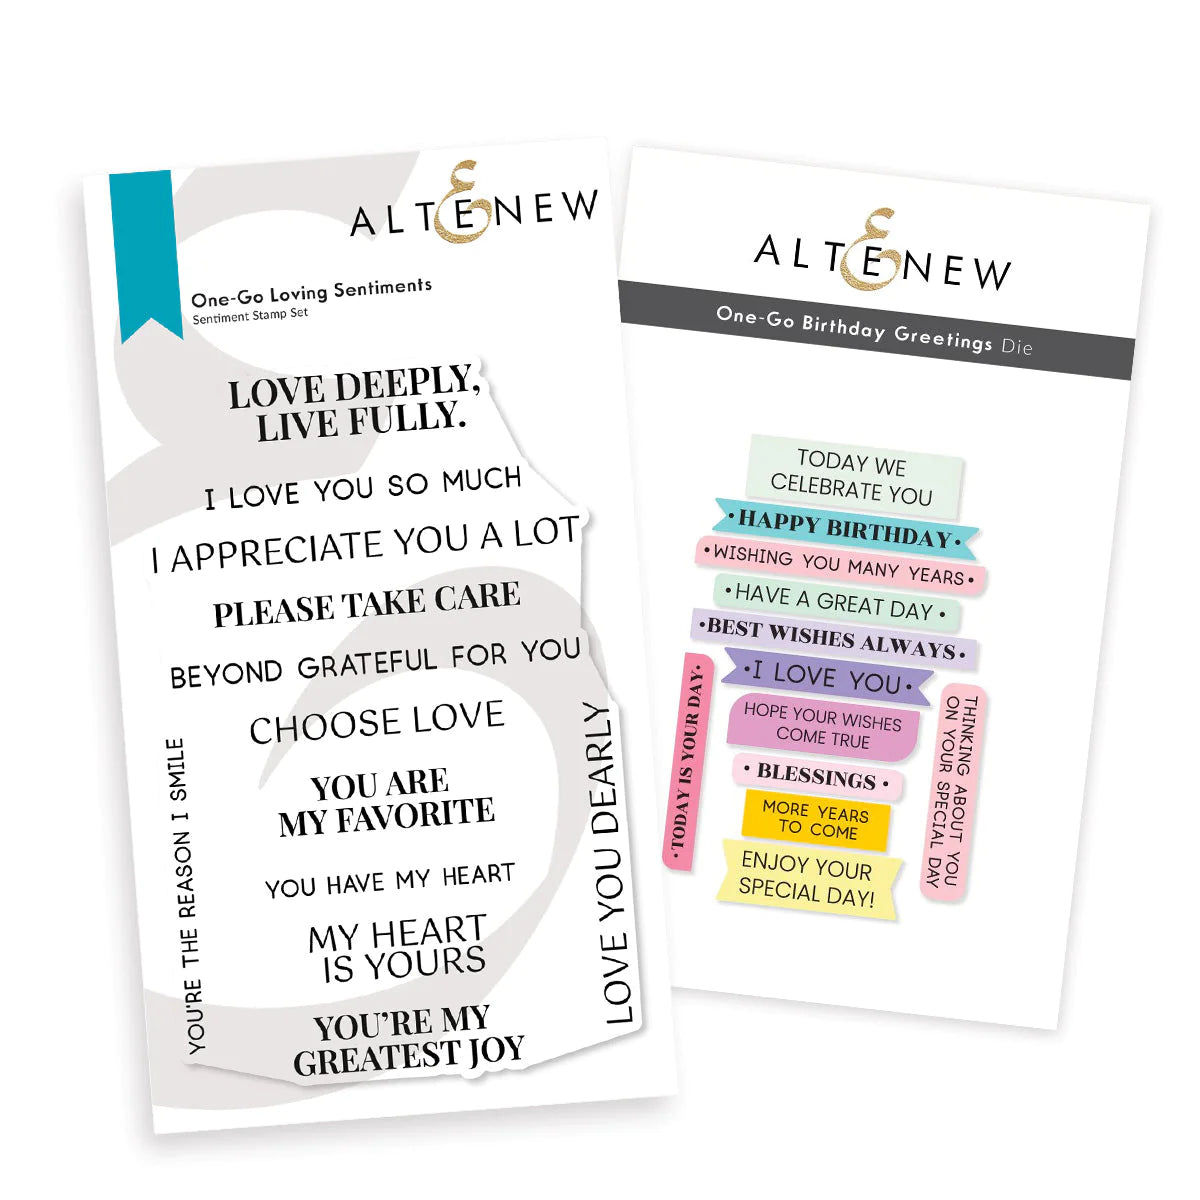 Altenew One-Go Loving Sentiments Stamp Set